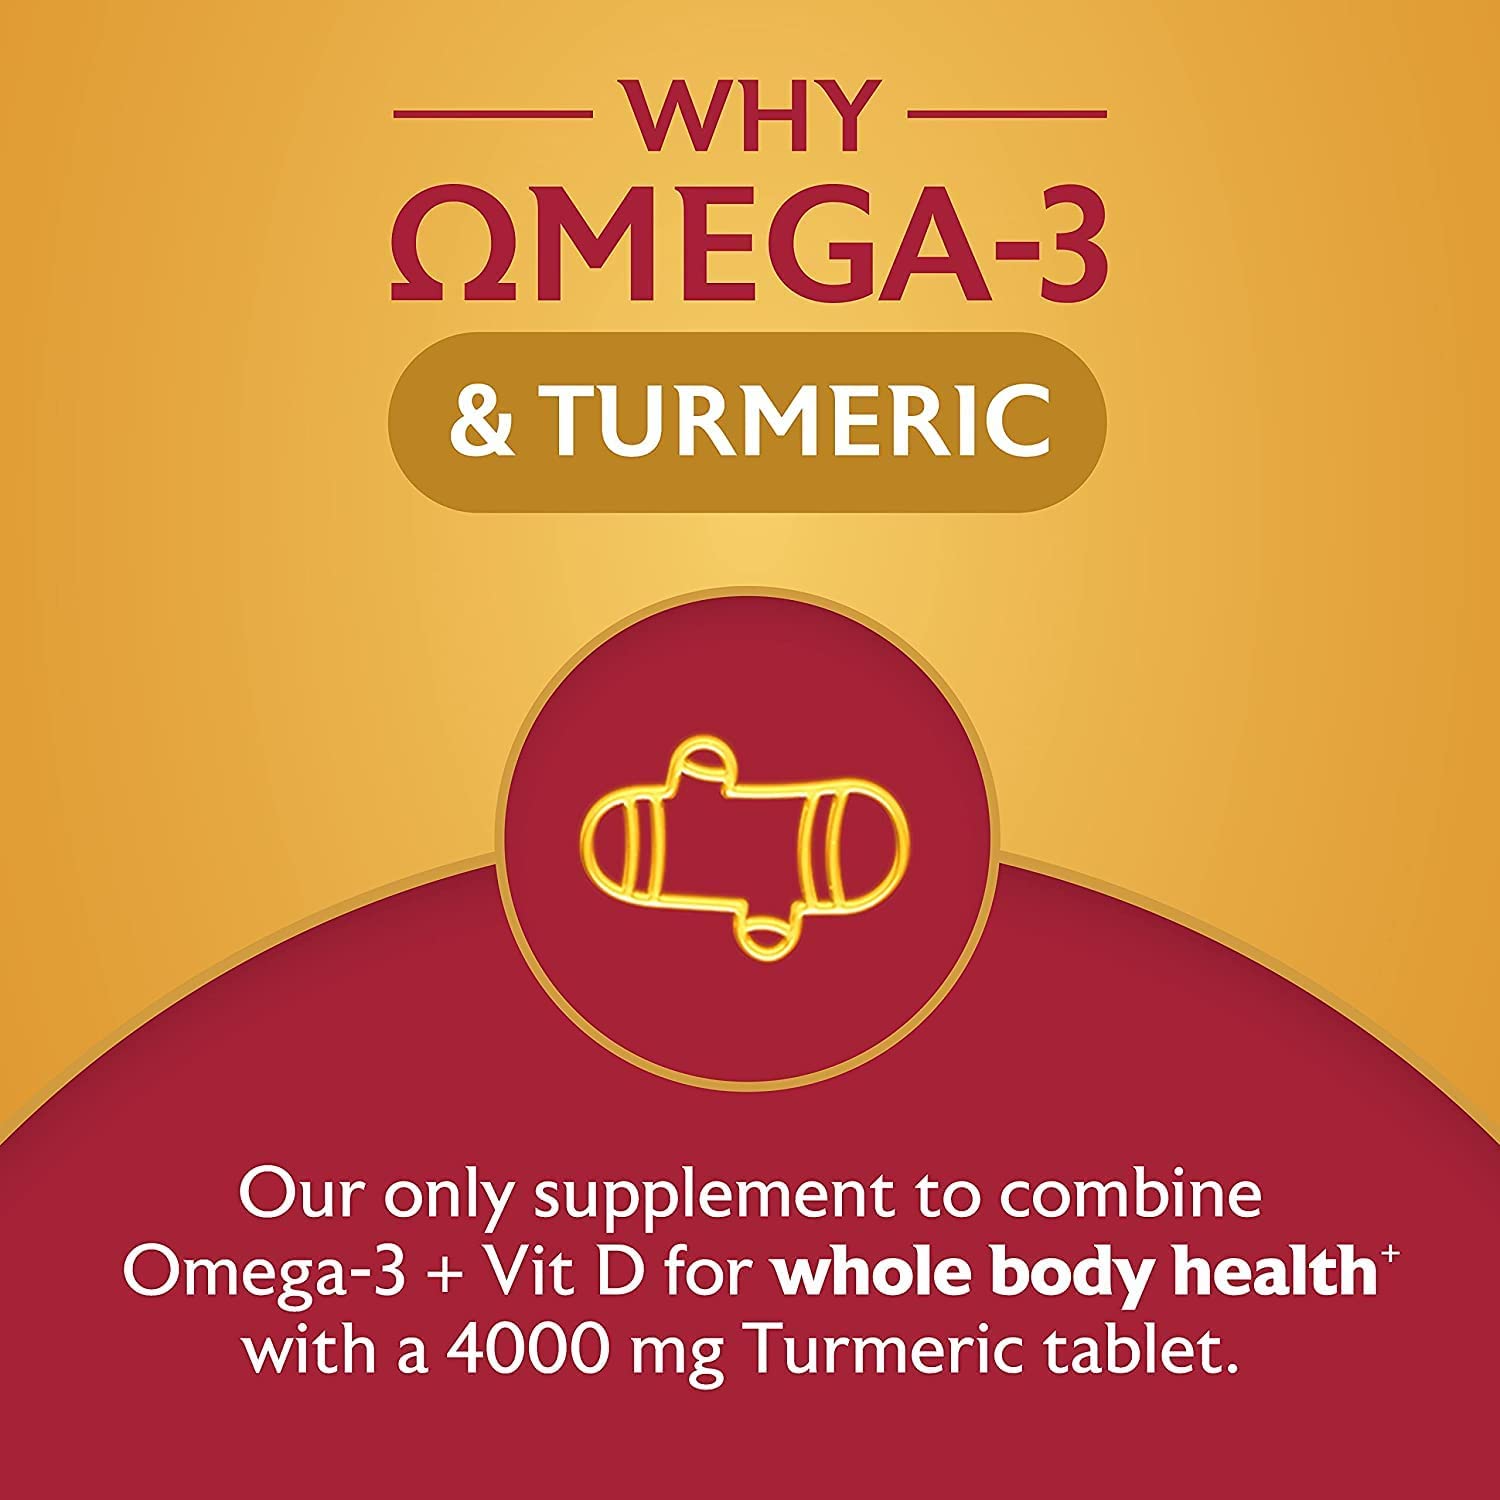 Seven Seas Omega-3 Fish Oil Turmeric, 500 mg Fish Oil + 300 mg Omega-3 -30 Tab Duo Pack - Healthxpress.ie